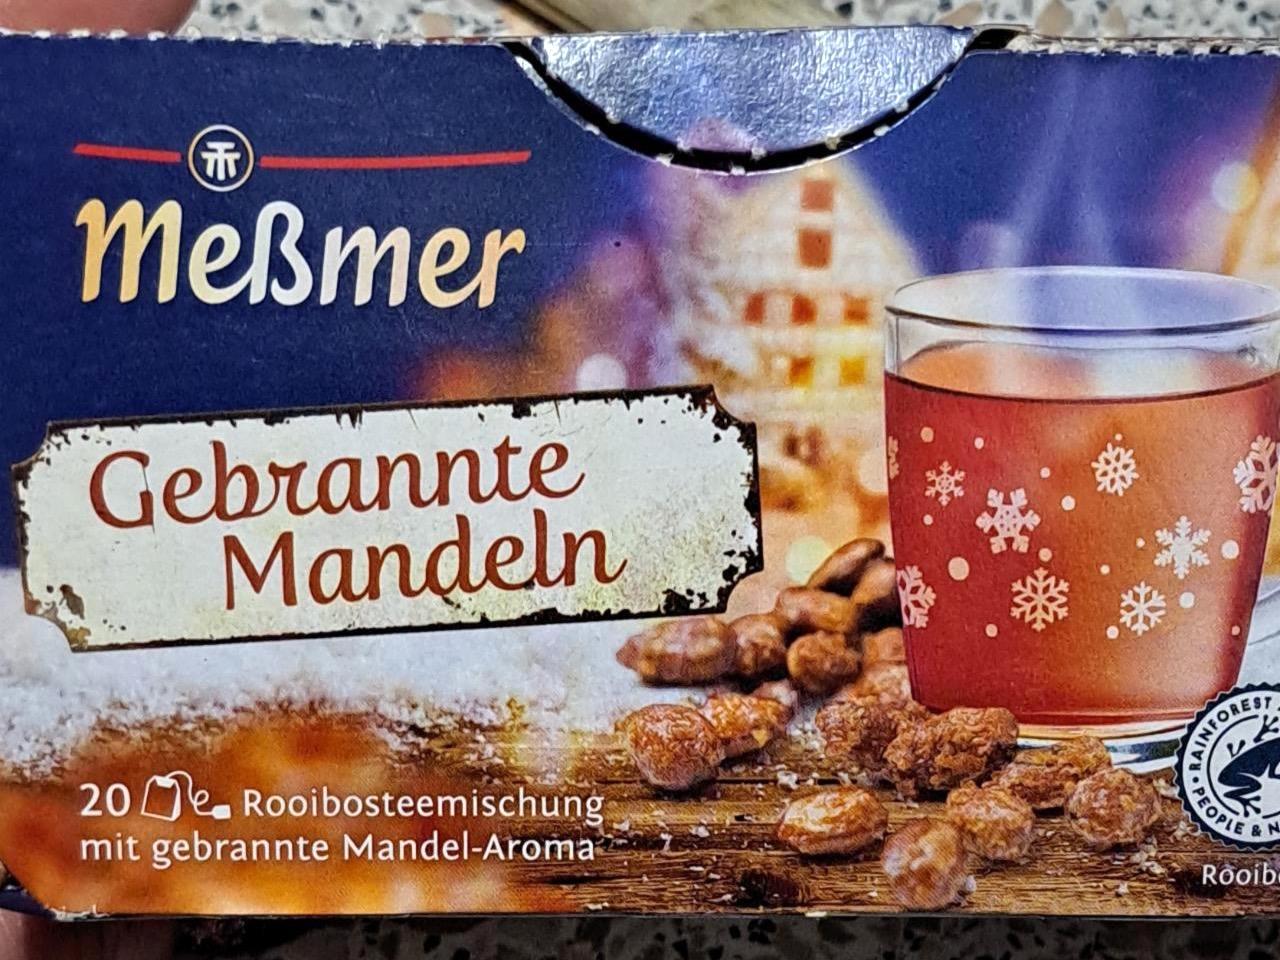 Képek - Téli tea Gebrannte Mandeln Messmer